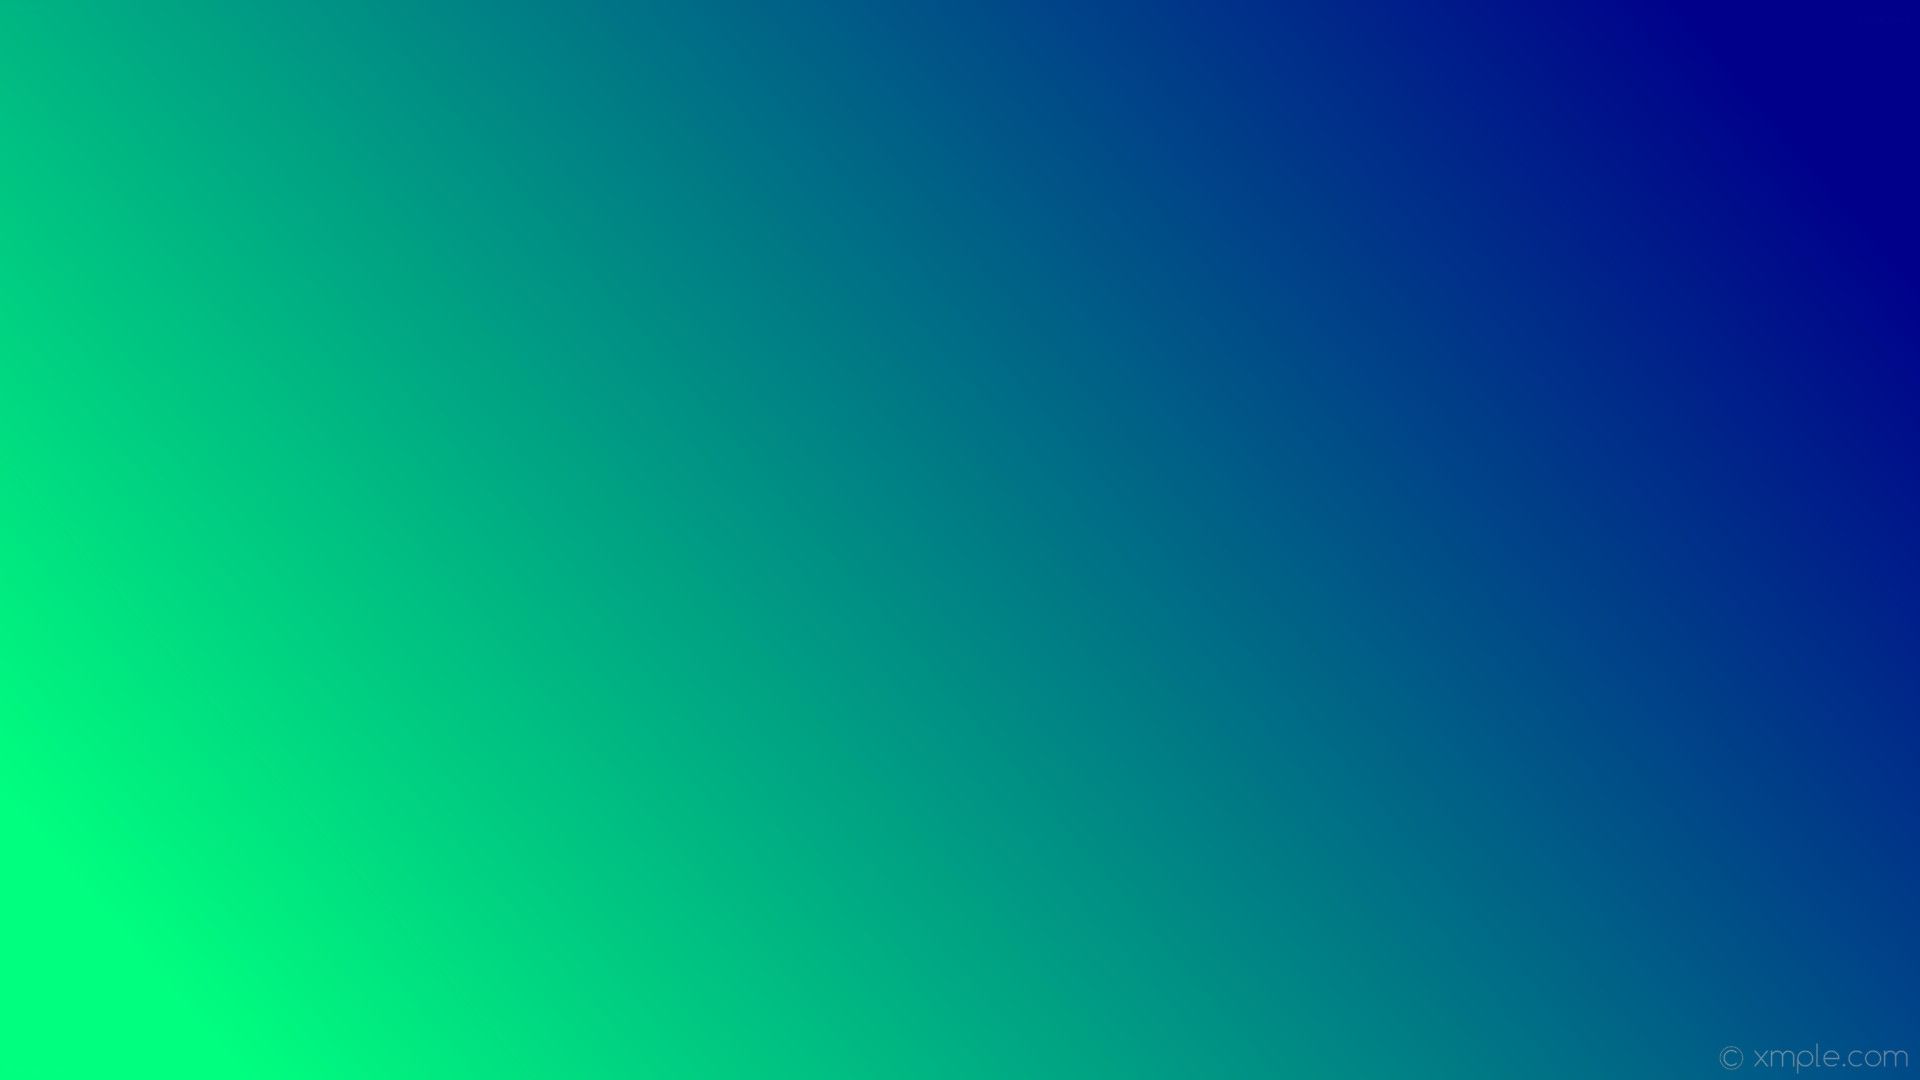 Blue And Green Wallpaper HD  PixelsTalkNet